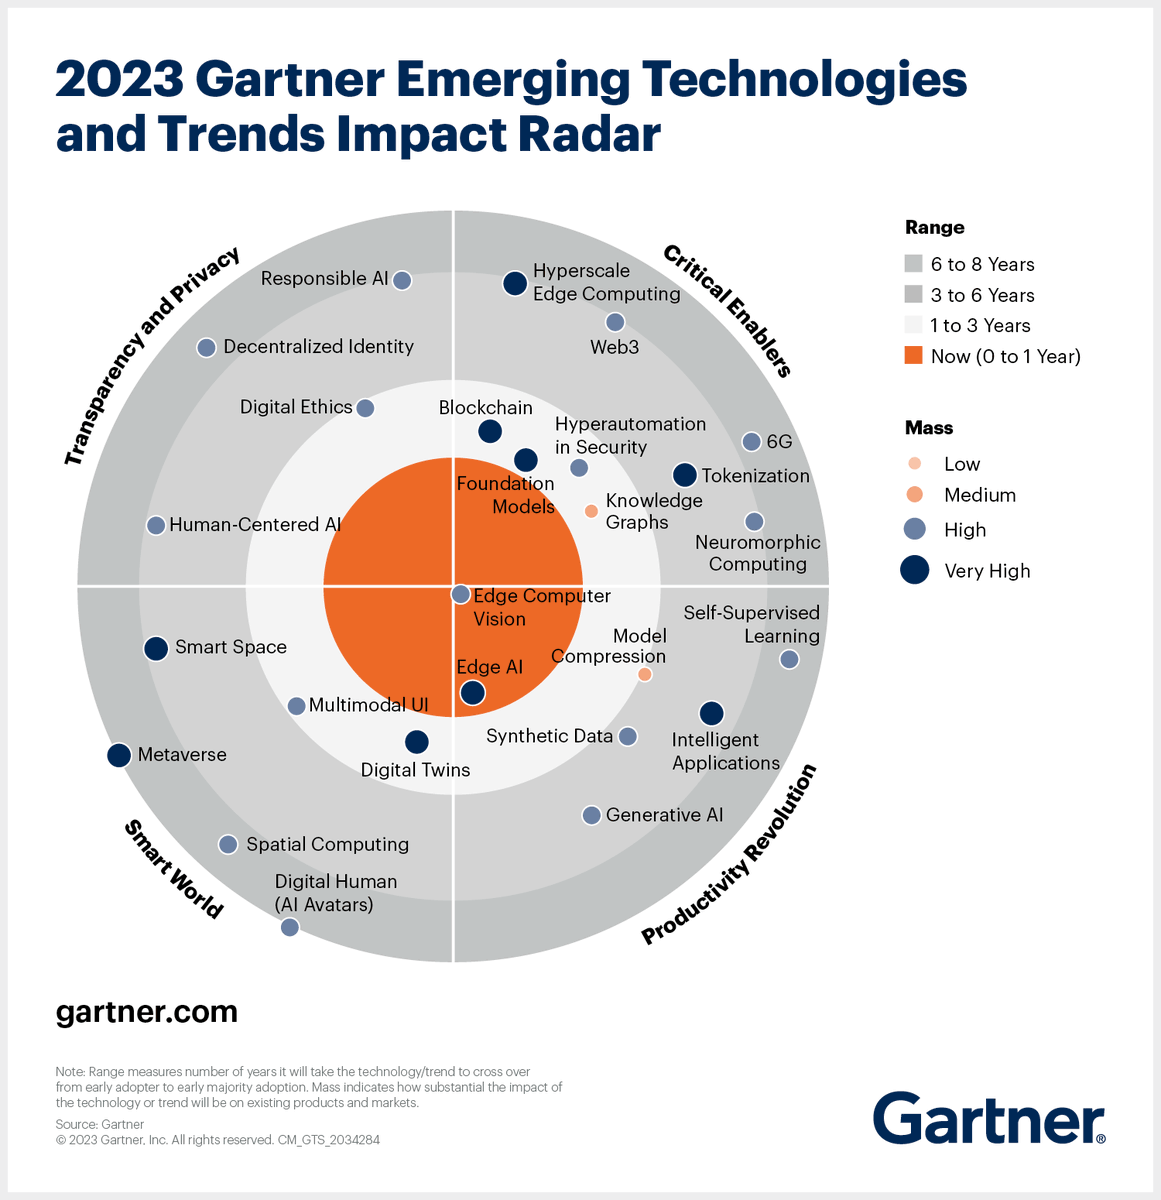 Product leaders: Explore these technologies now to capitalize on market opportunities ➡ gtnr.it/43GOwWA #GartnerHT #EmergingTechnology